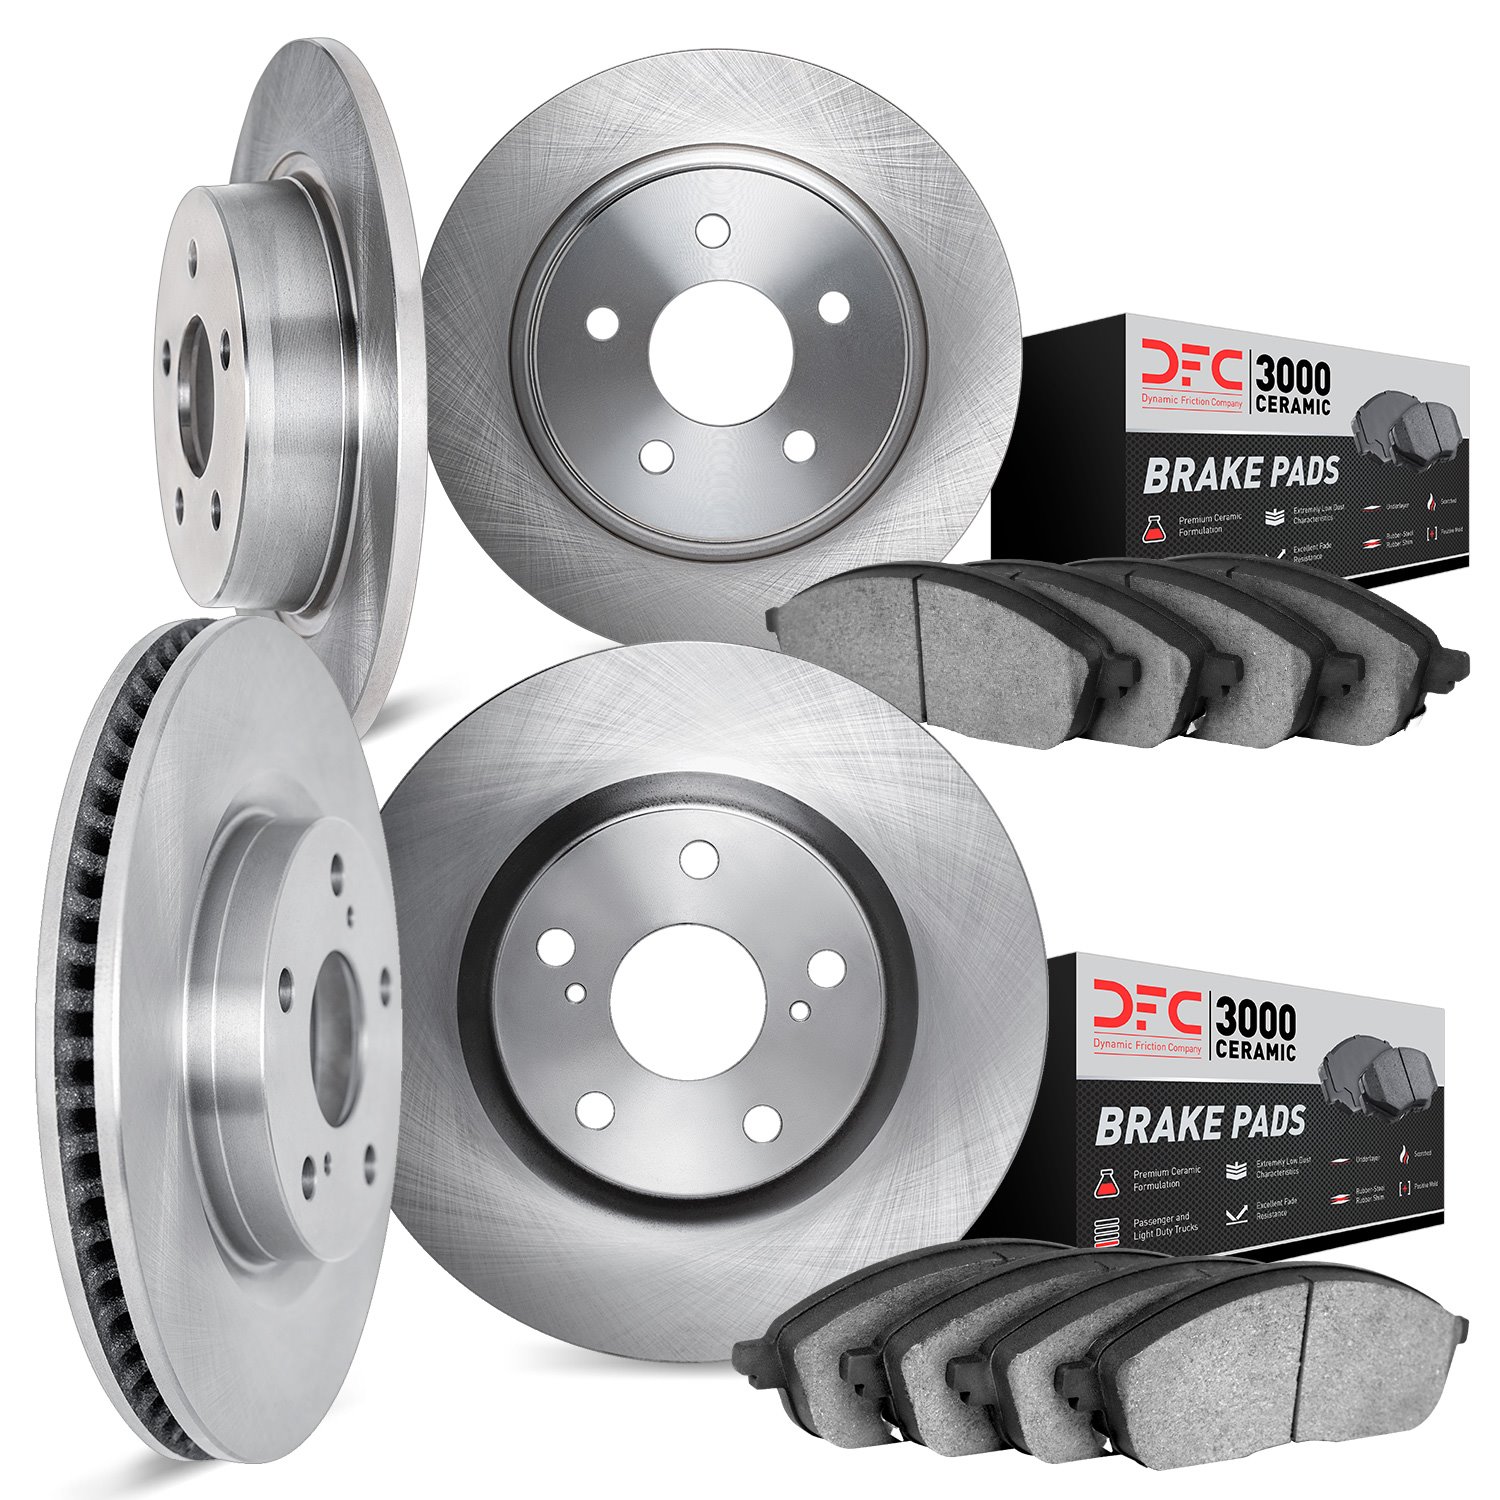 6304-03082 Brake Rotors with 3000-Series Ceramic Brake Pads Kit, Fits Select Kia/Hyundai/Genesis, Position: Front and Rear